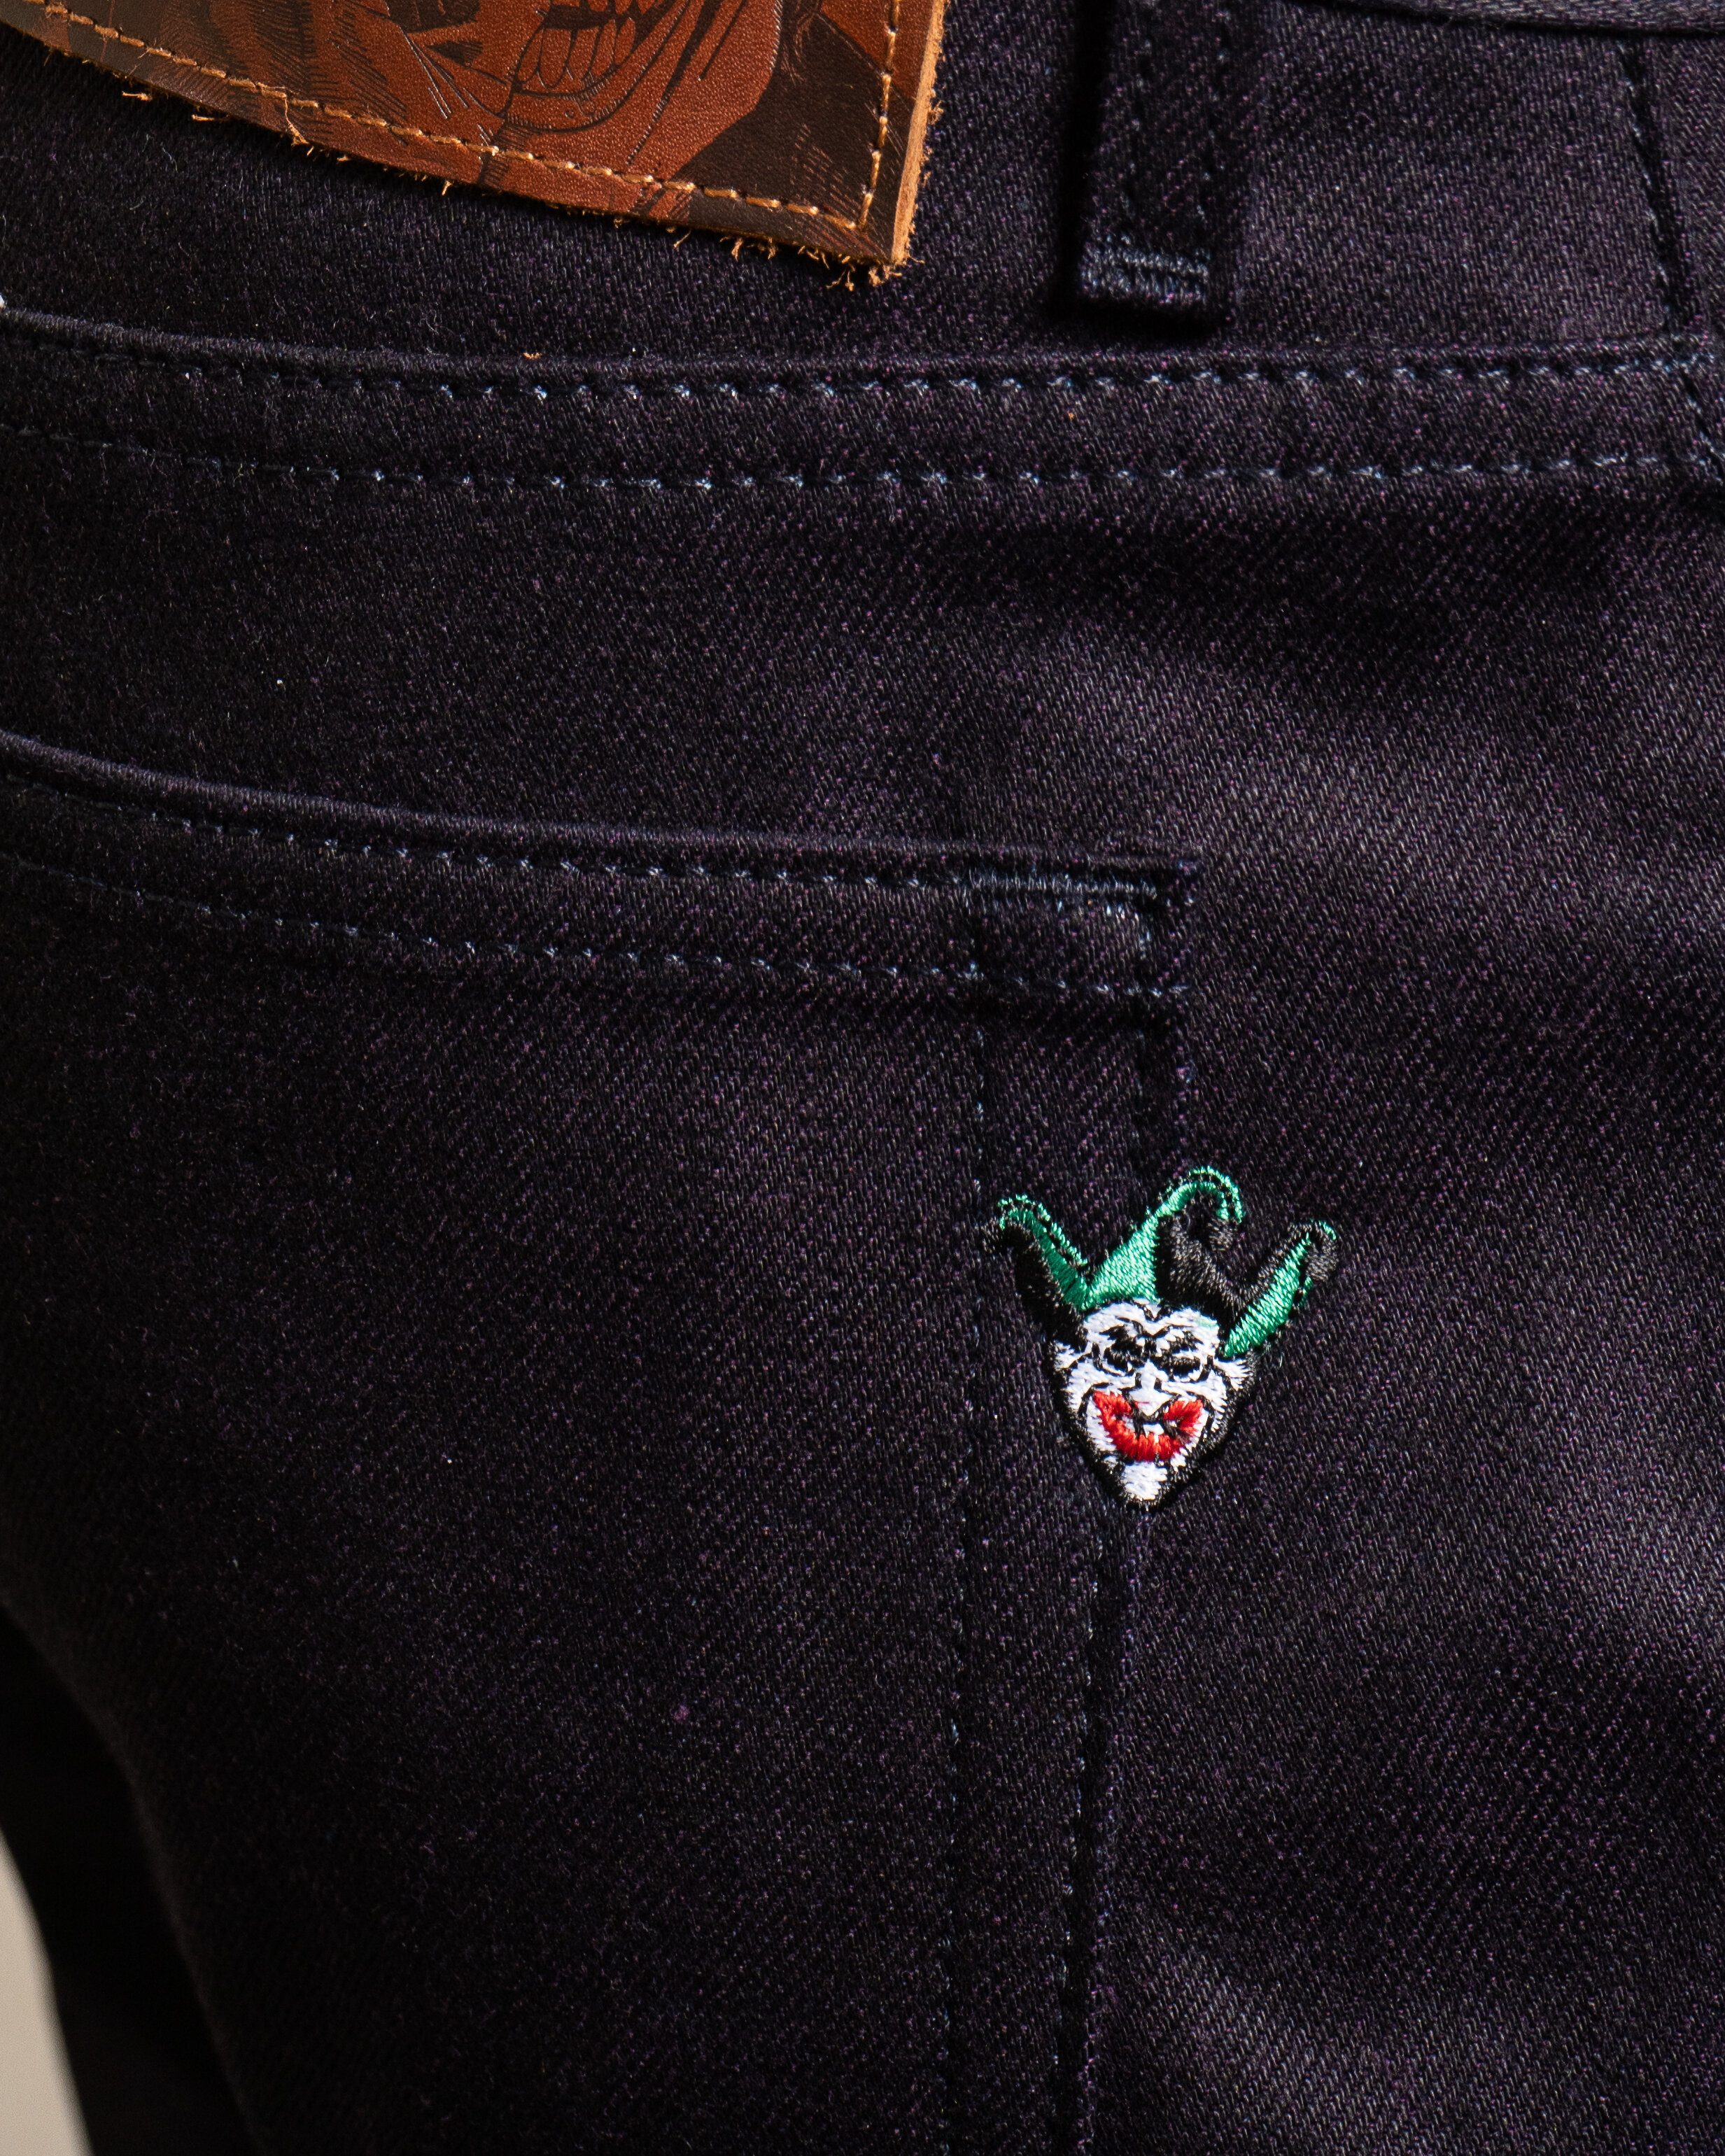 The Joker Clown Price Of Crime Selvedge - Denim Embroidery